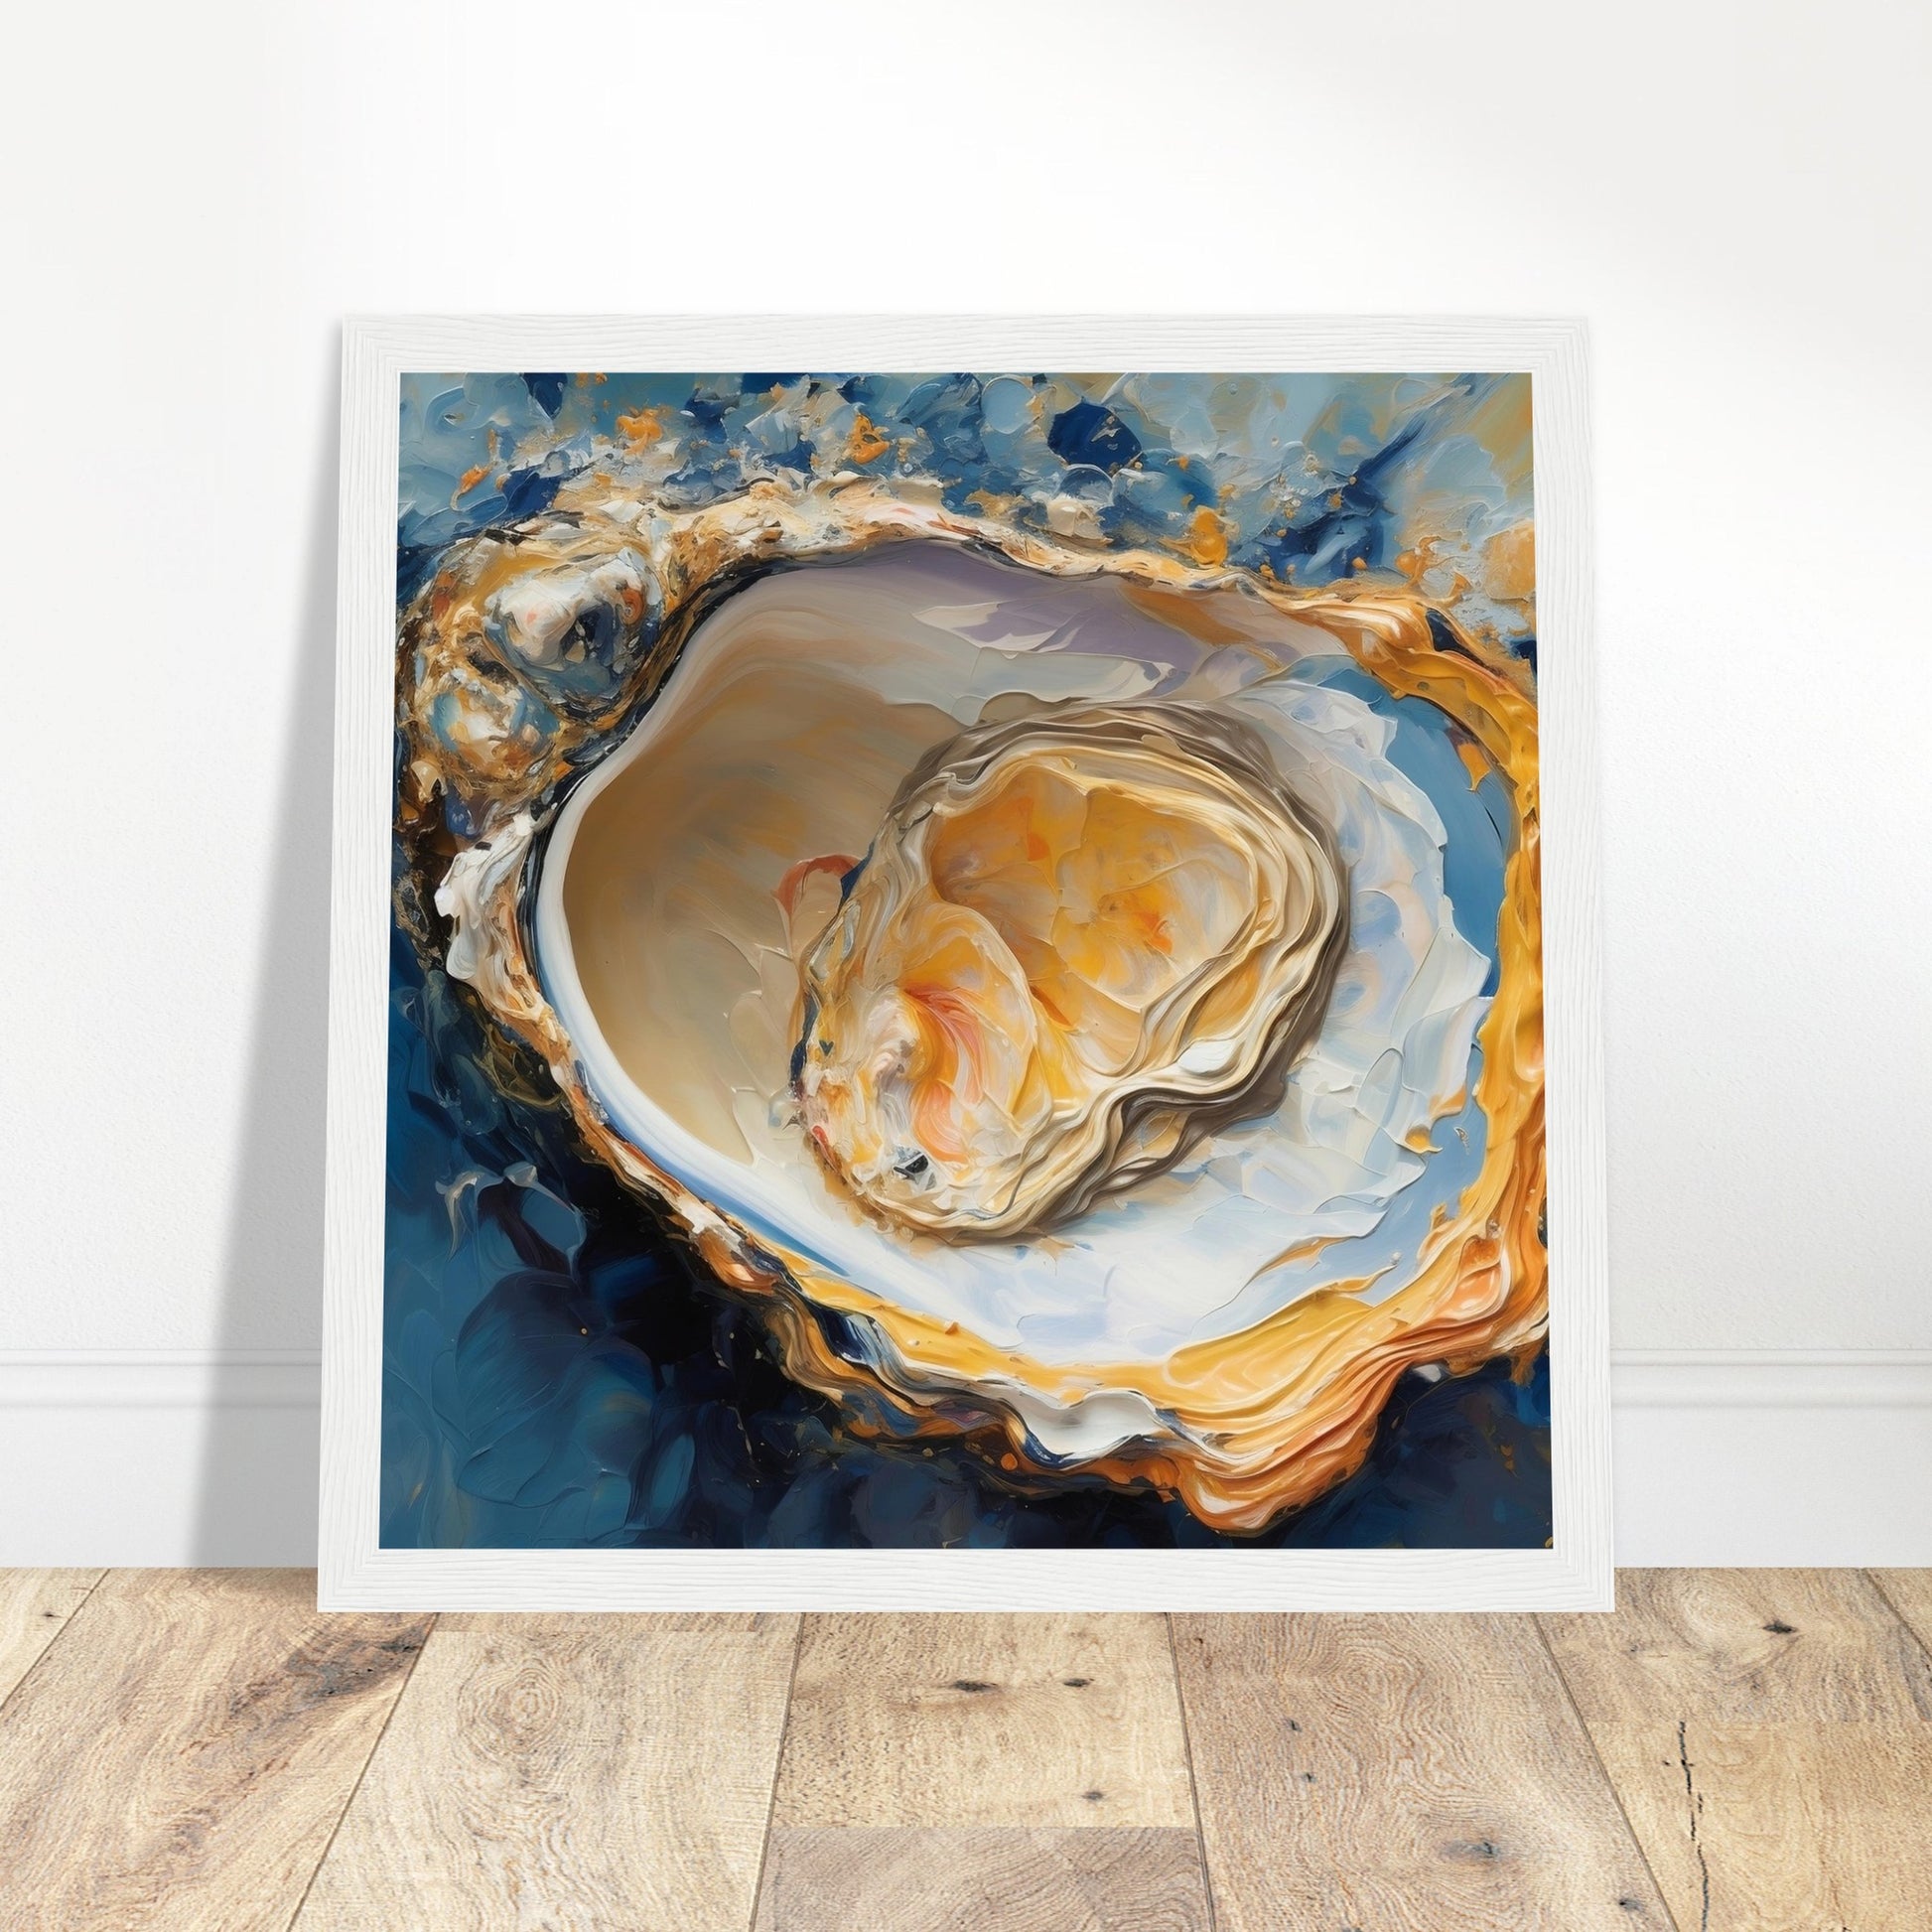 Pearl Elegance Sea Artwork #2 - Print Room Ltd White frame 50x50 cm / 20x20"